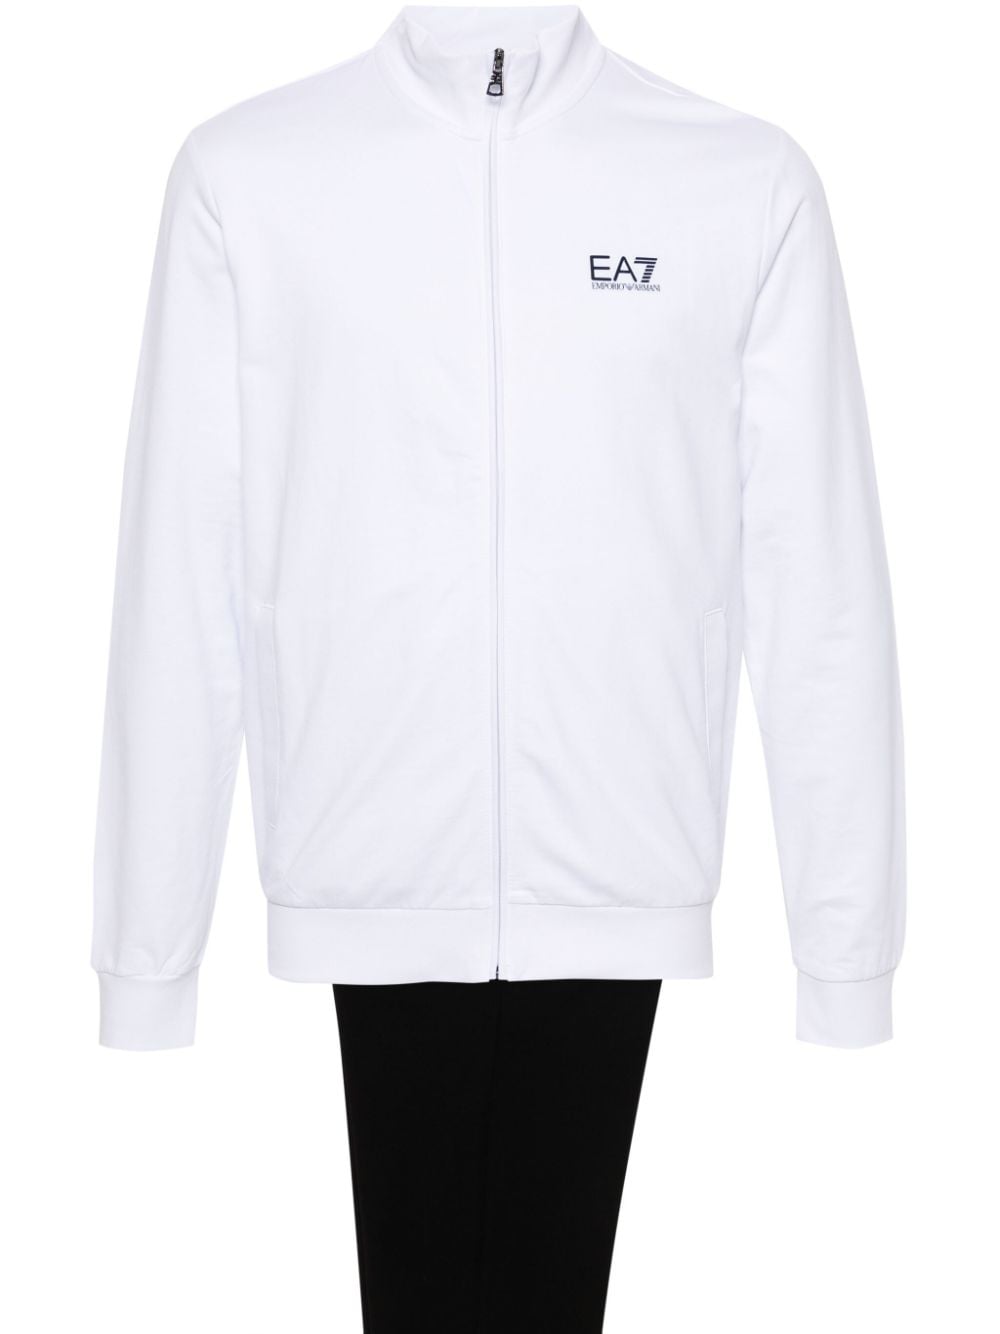 Ea7 Emporio Armani logo-print cotton tracksuit - White von Ea7 Emporio Armani